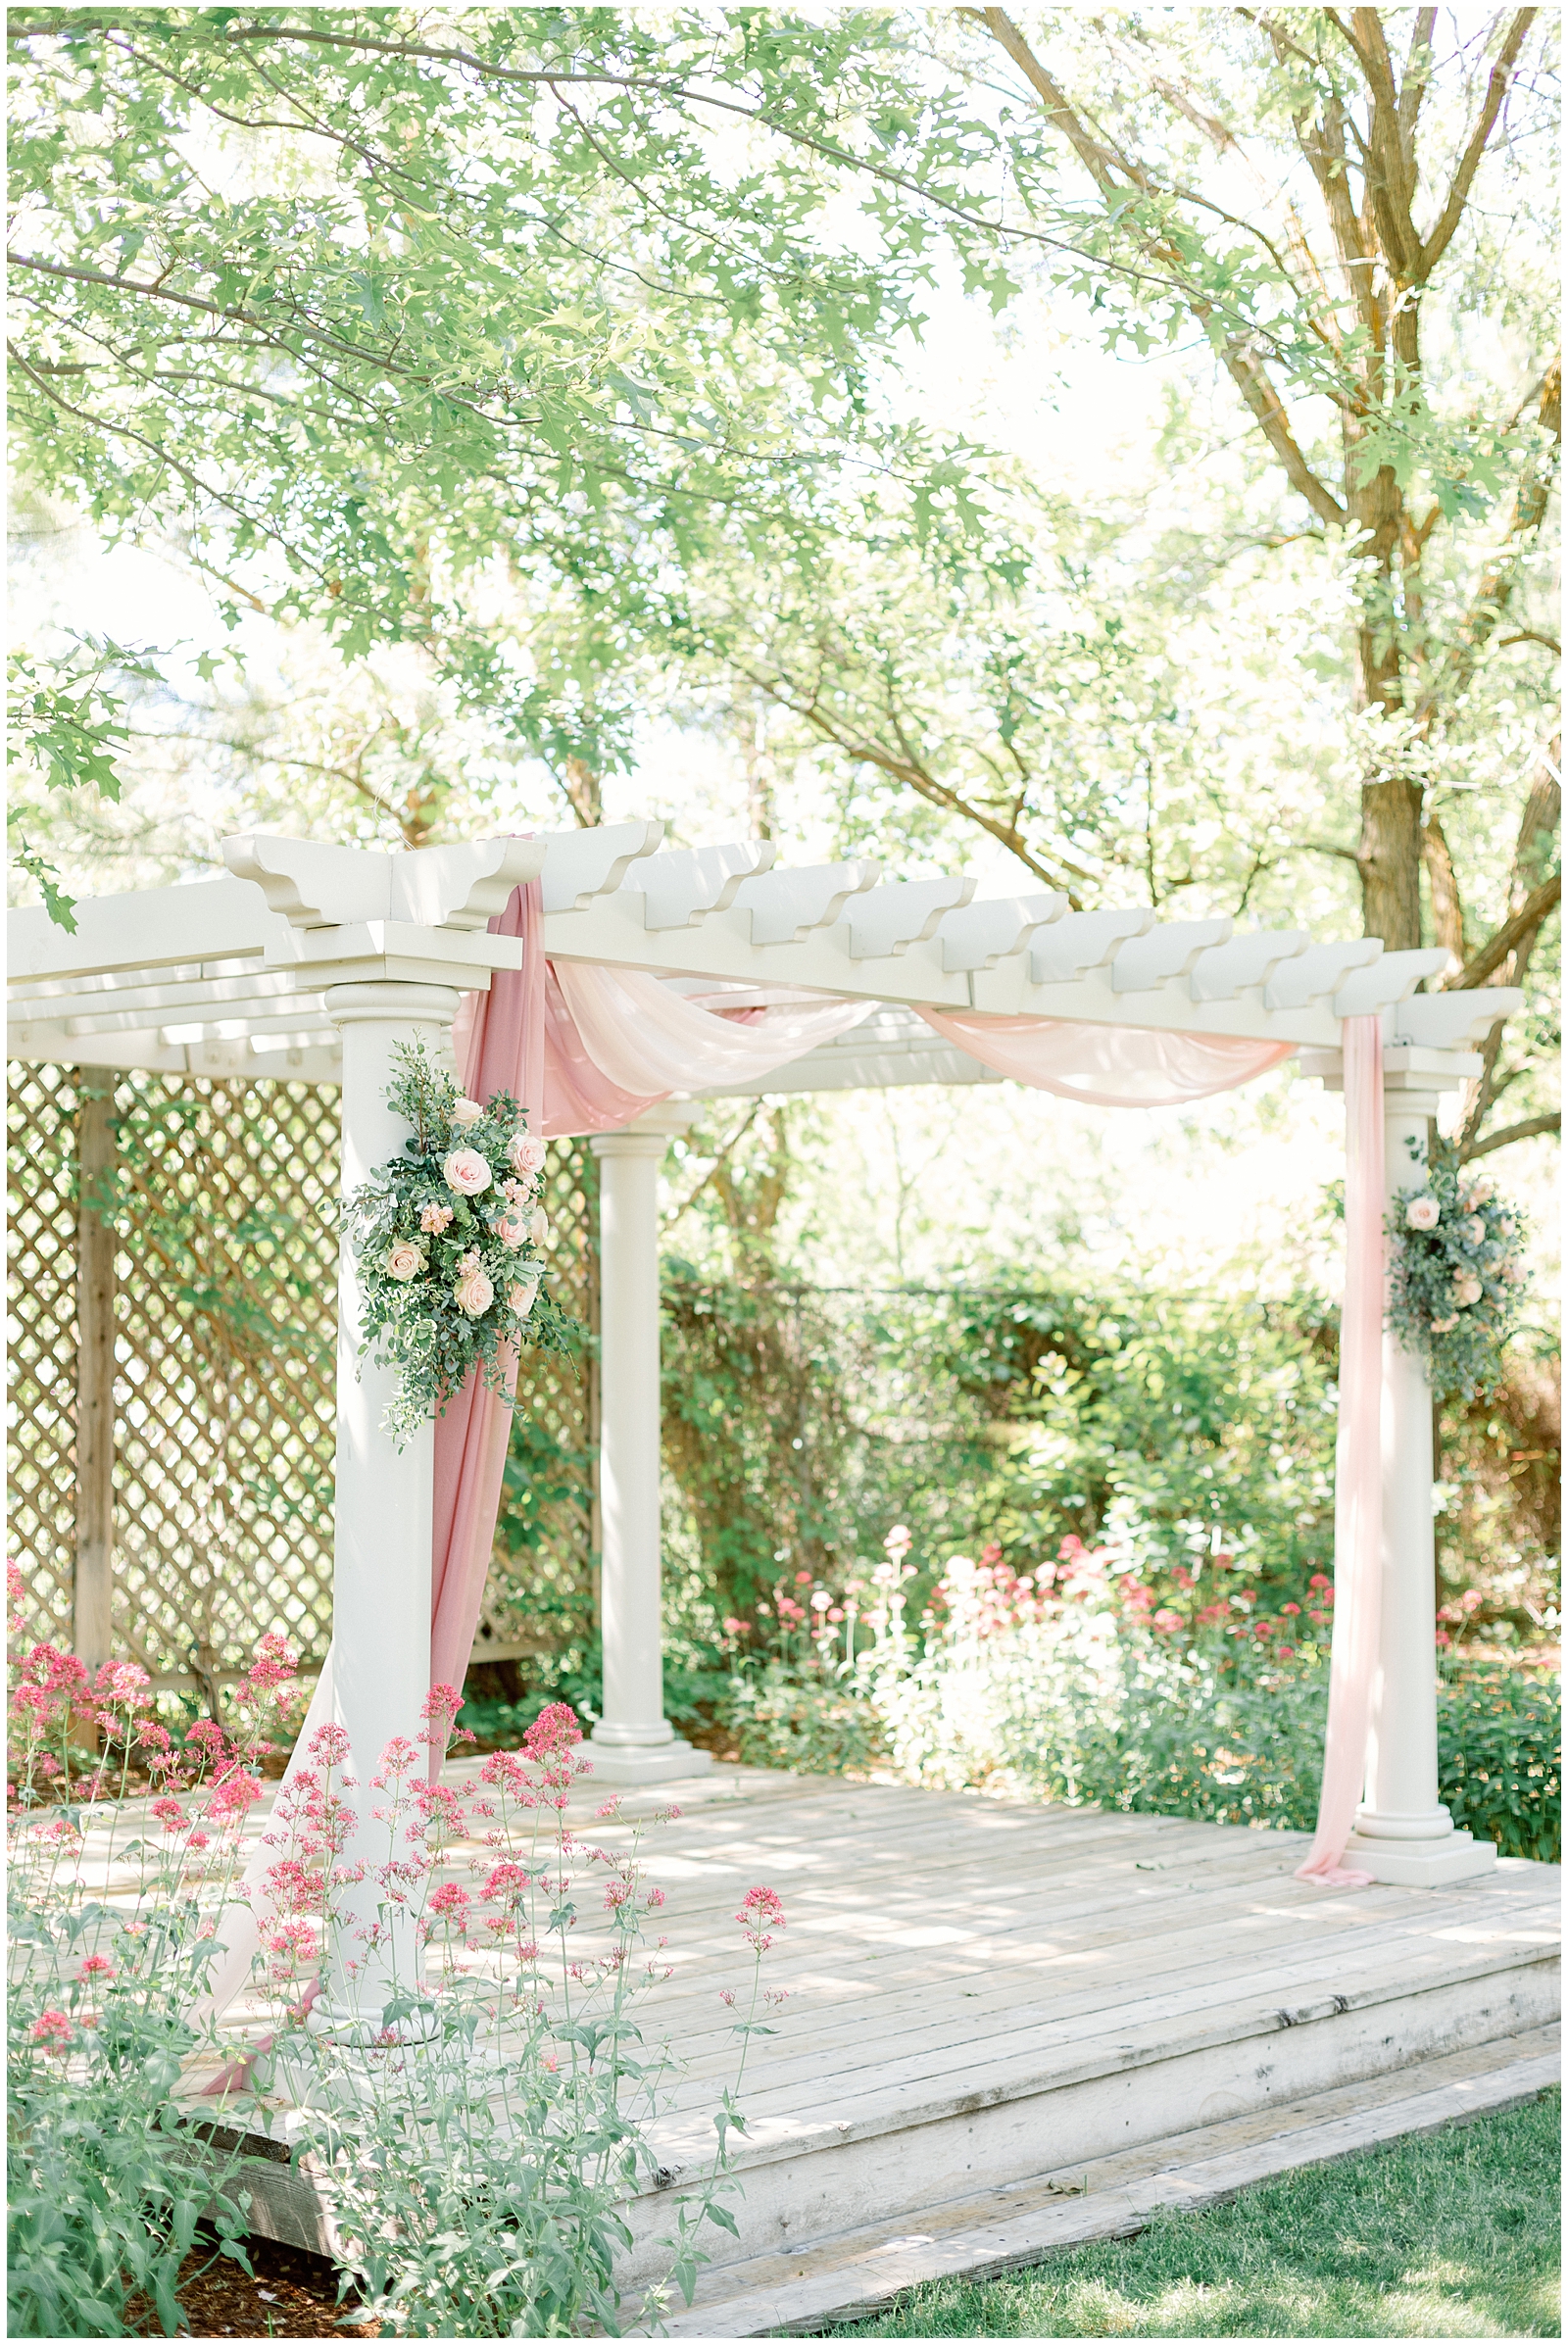 Dreamy Dusty Rose Garden Ceremony with white arbor at Dreamy Idaho Garden Wedding